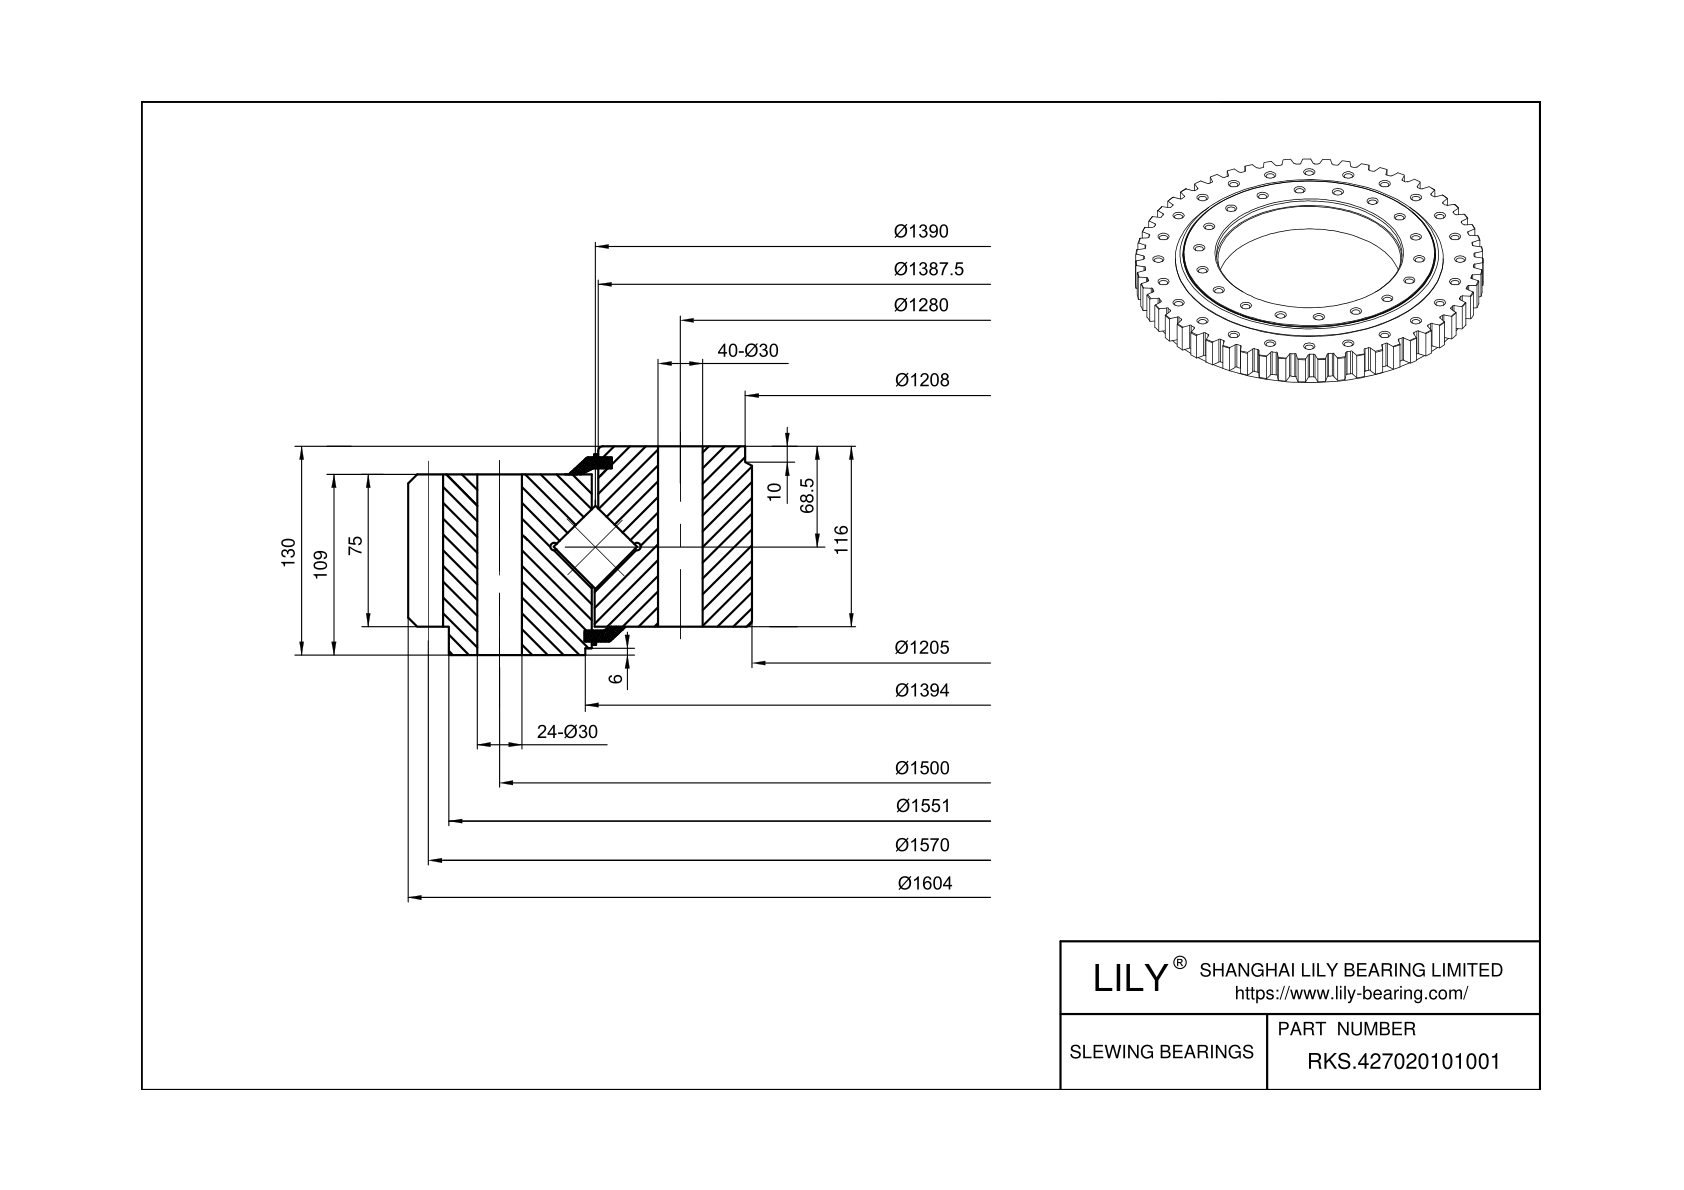 RKS.427020101001 Cross Roller Slewing Ring Bearing cad drawing